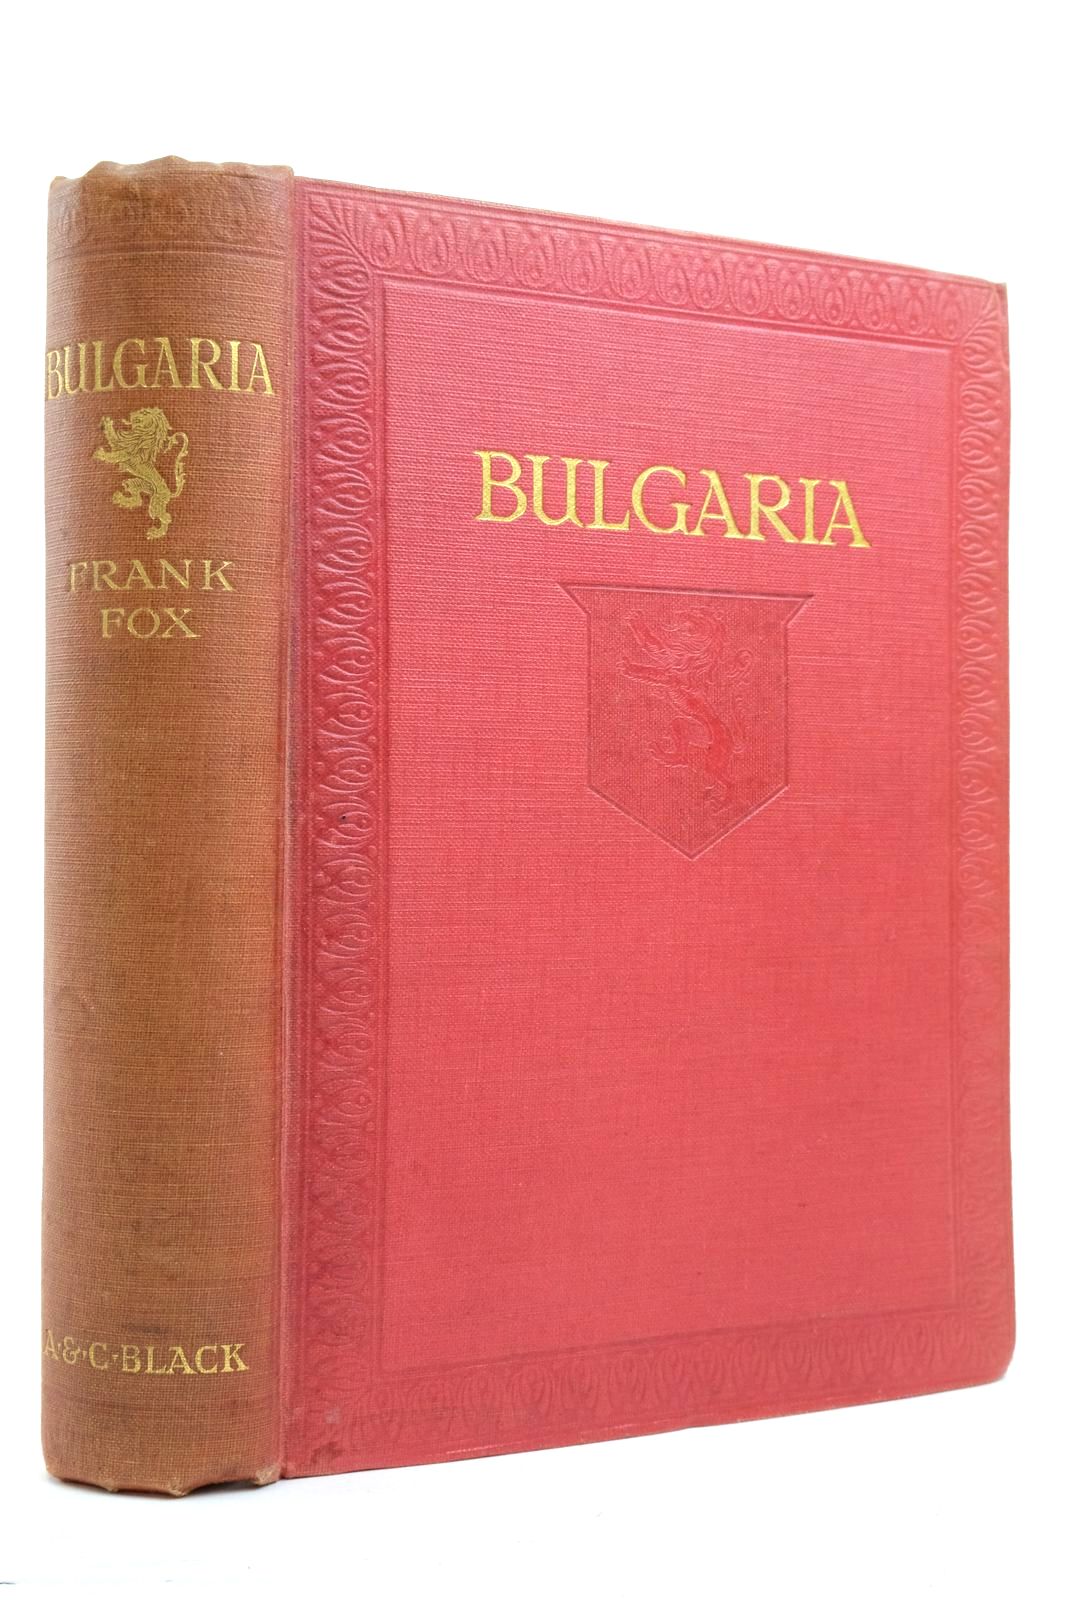 Photo of BULGARIA- Stock Number: 2137221